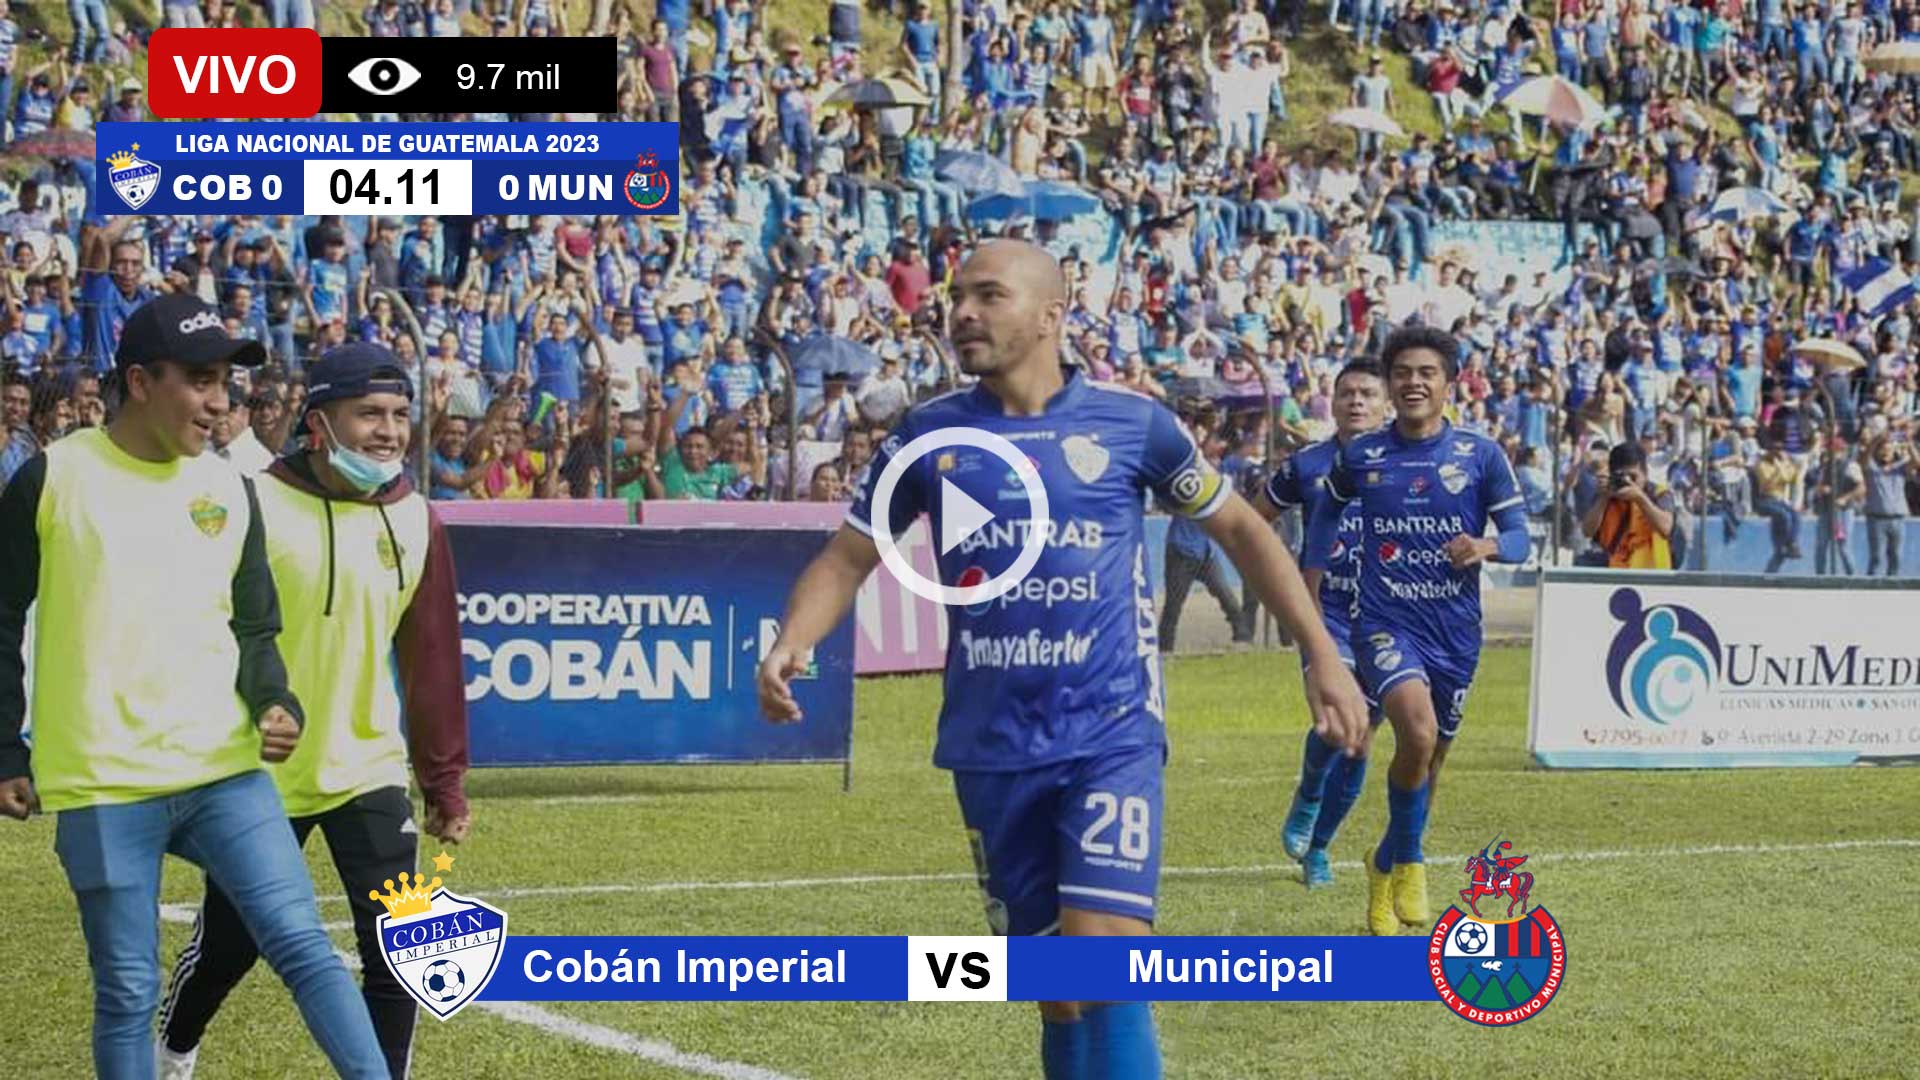 Cobán-Imperial-vs-Municipal-en-vivo-online-gratis-por-internet